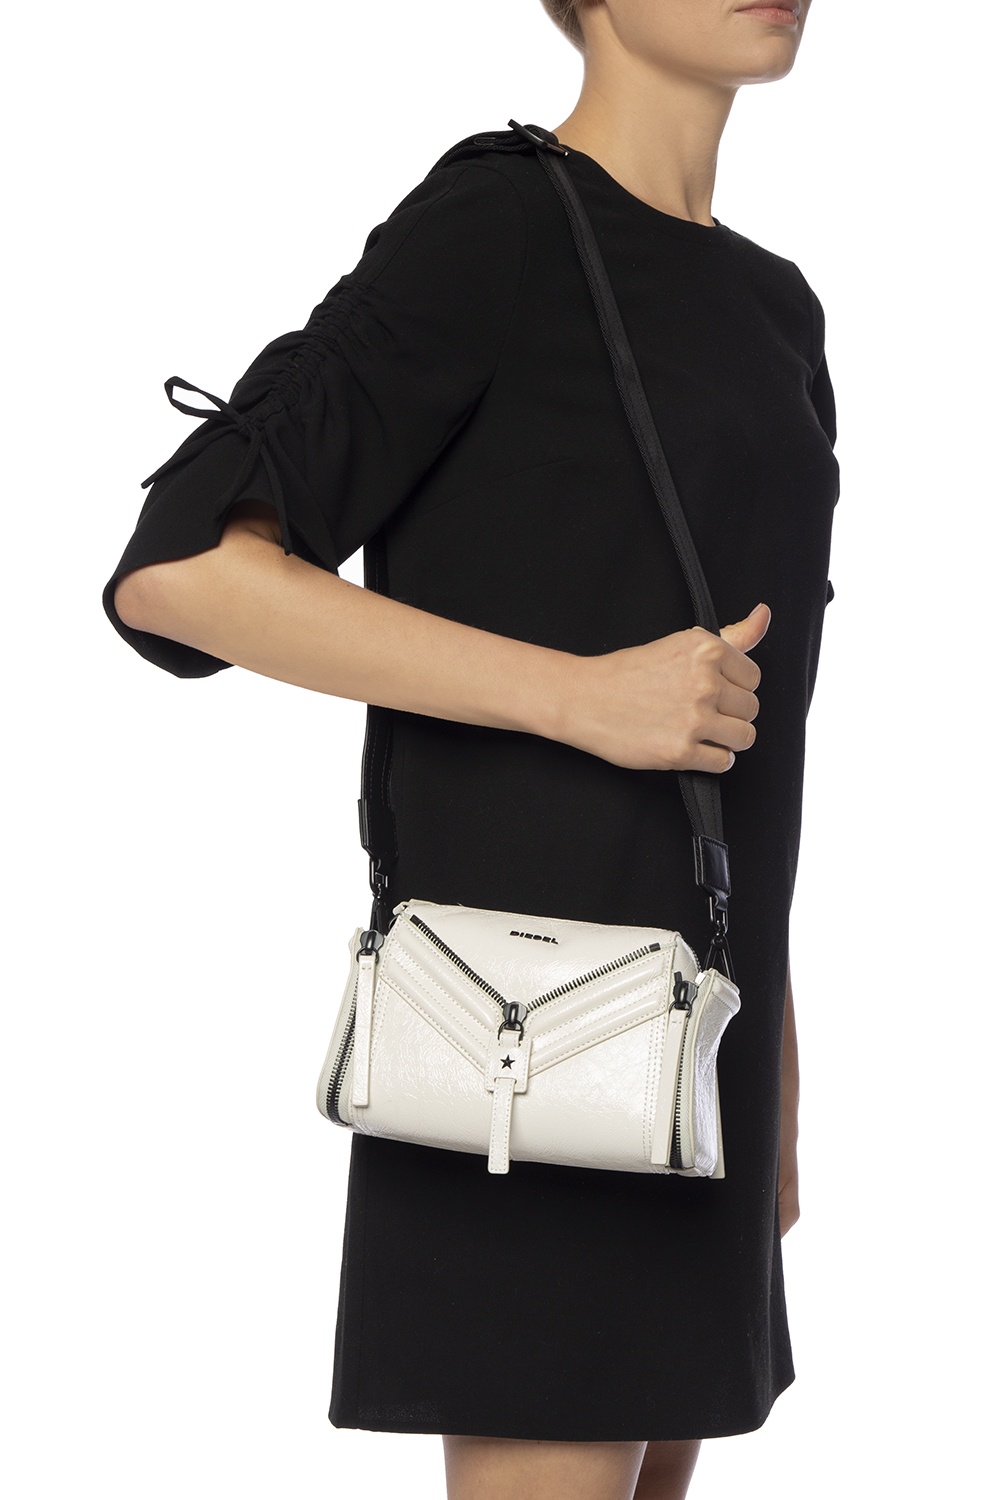 White 'Le-Zipper' shoulder bag Diesel - Vitkac Australia